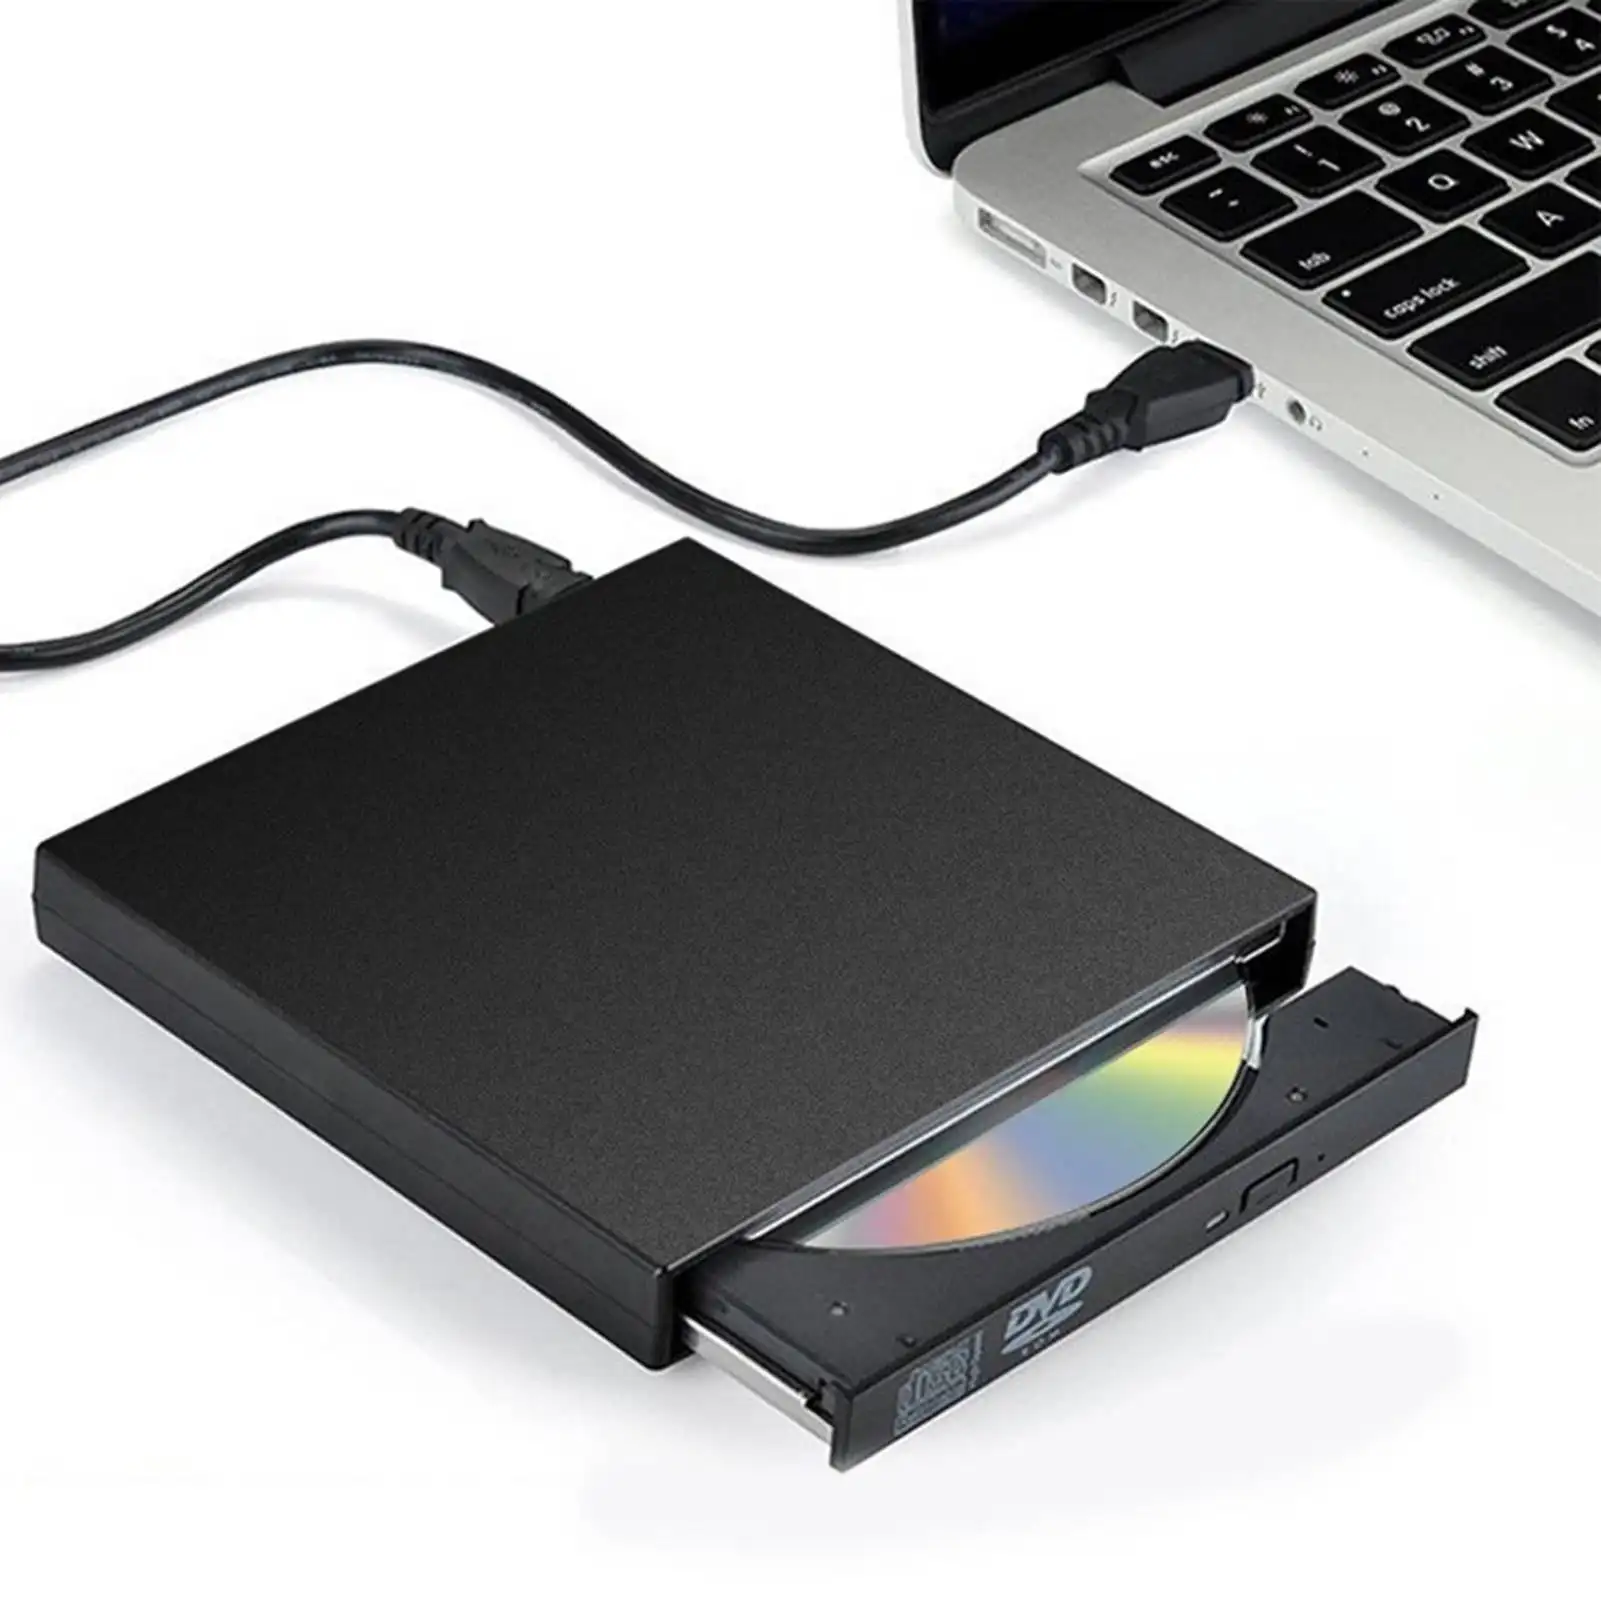 Pemutar DVD portabel, eksternal CD DVD Drive USB 2.0 DVD Optical Reader Portable DVD Player untuk PC Laptop Desktop komputer